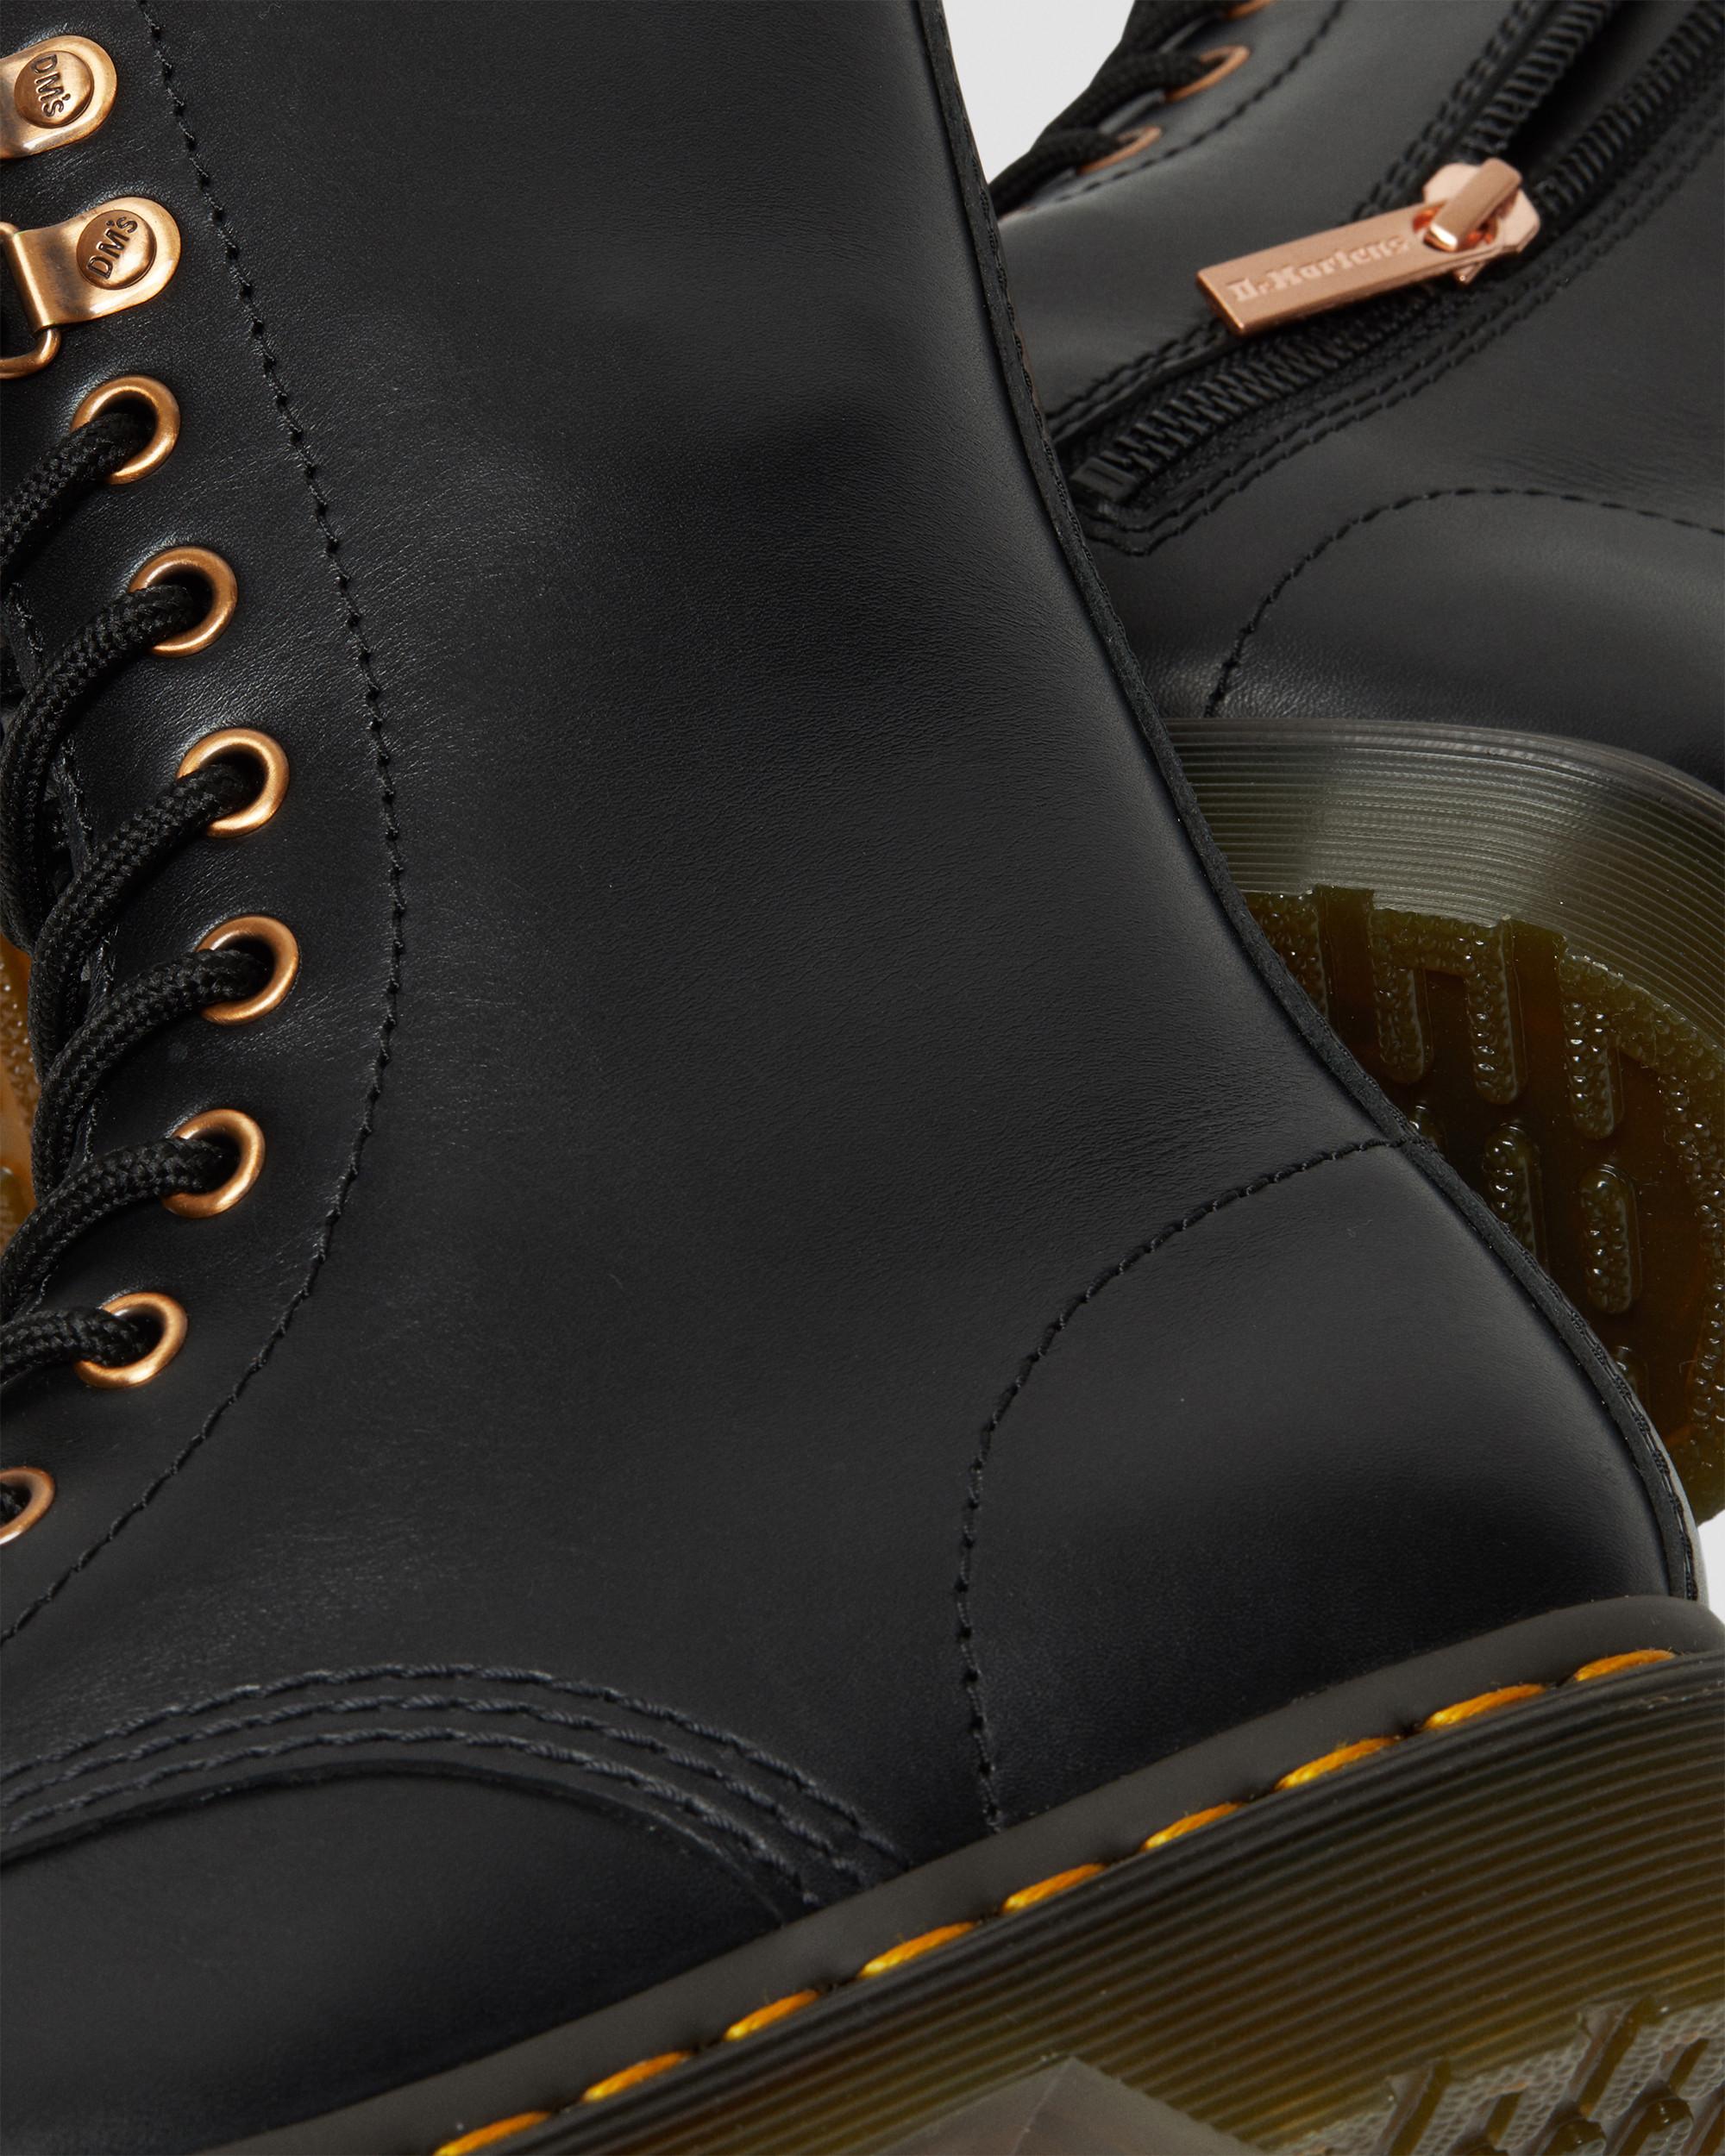 1490 Rose Gold Hardware Leather Mid Calf Boots, Black | Dr. Martens